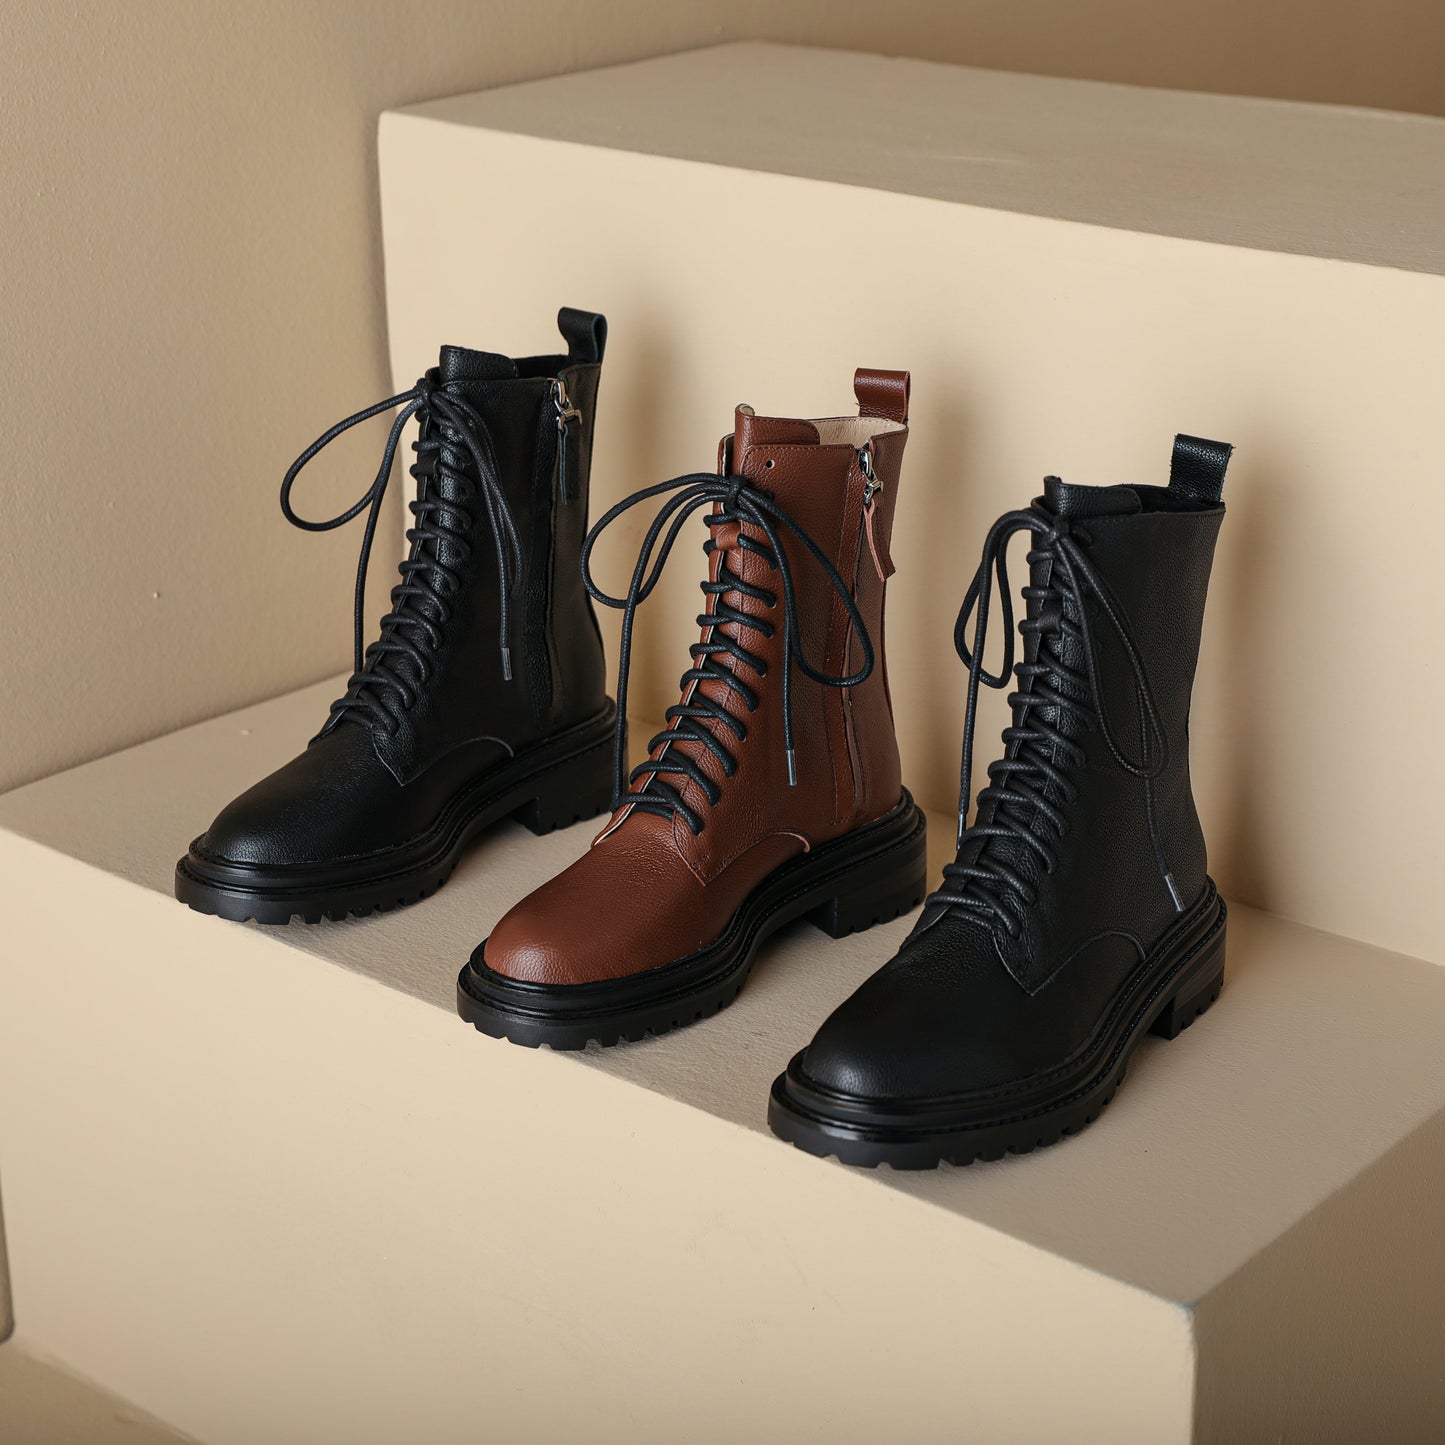 TinaCus Women's Handmade Genuine Leather Block Heel Selftie Side Zip Round Toe Mid Calf Boots